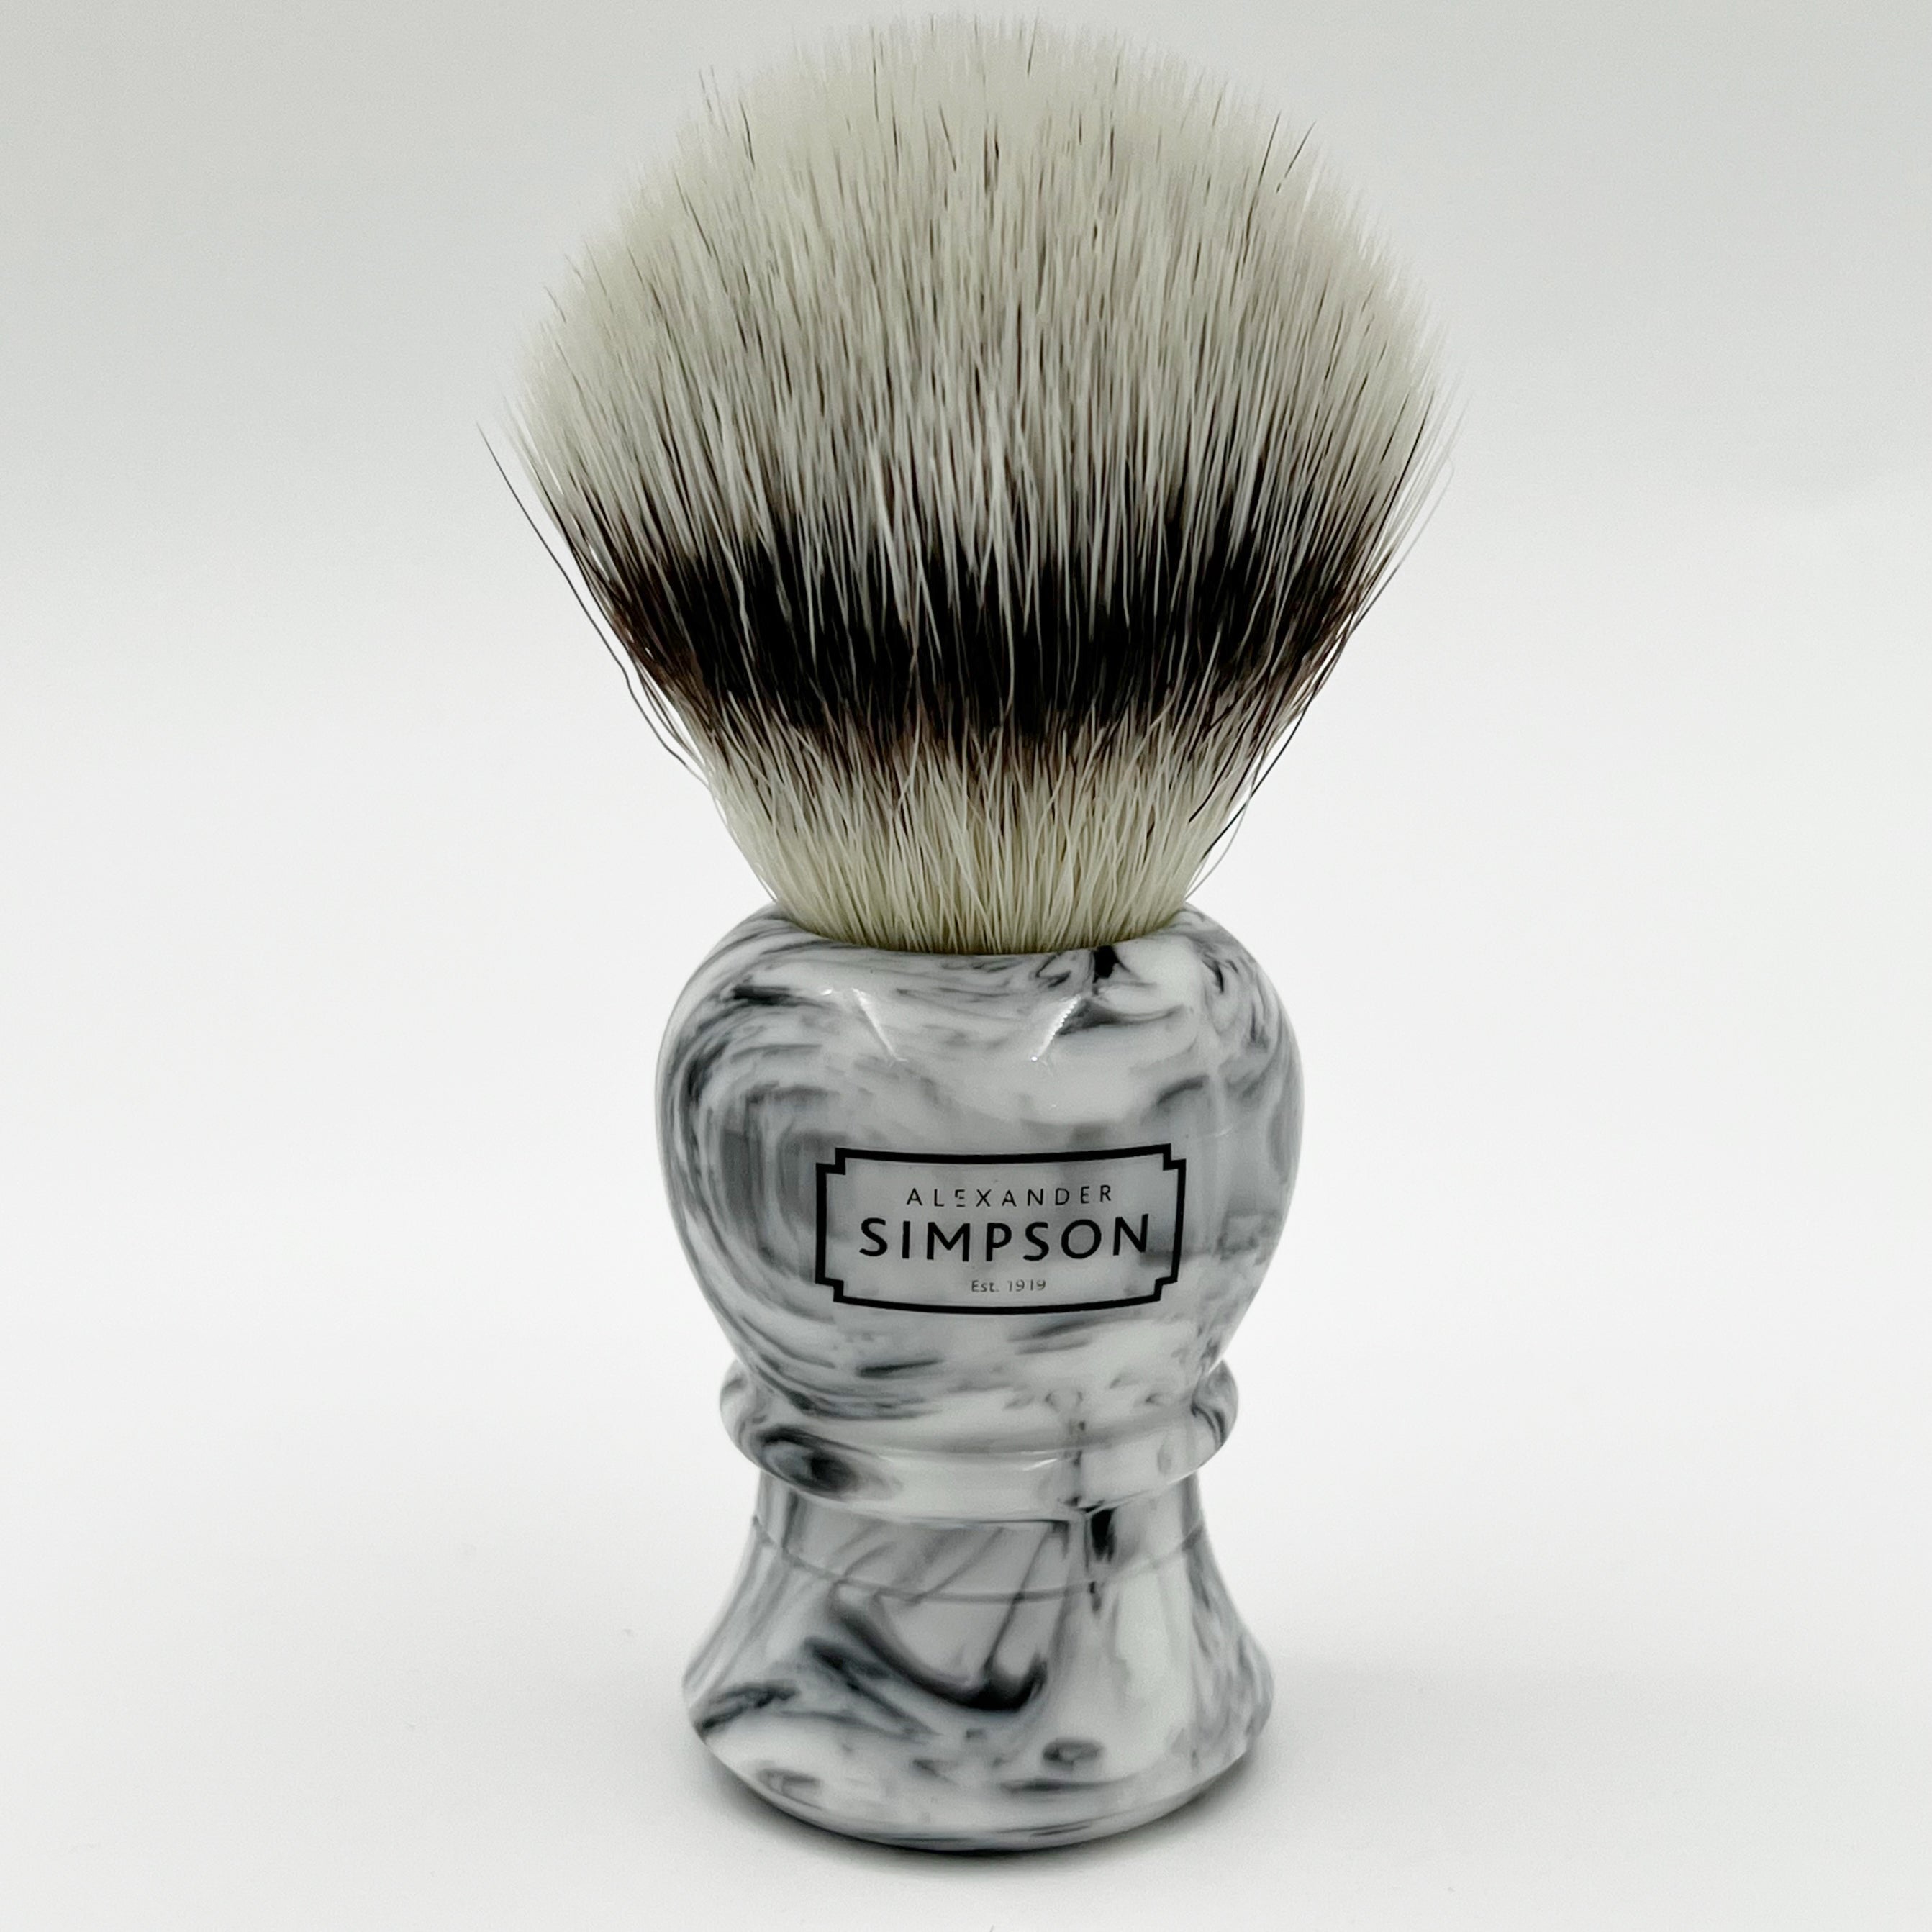 Simpson Islington - Platinum Synthetic - Grey Italian Marble Shaving Brush